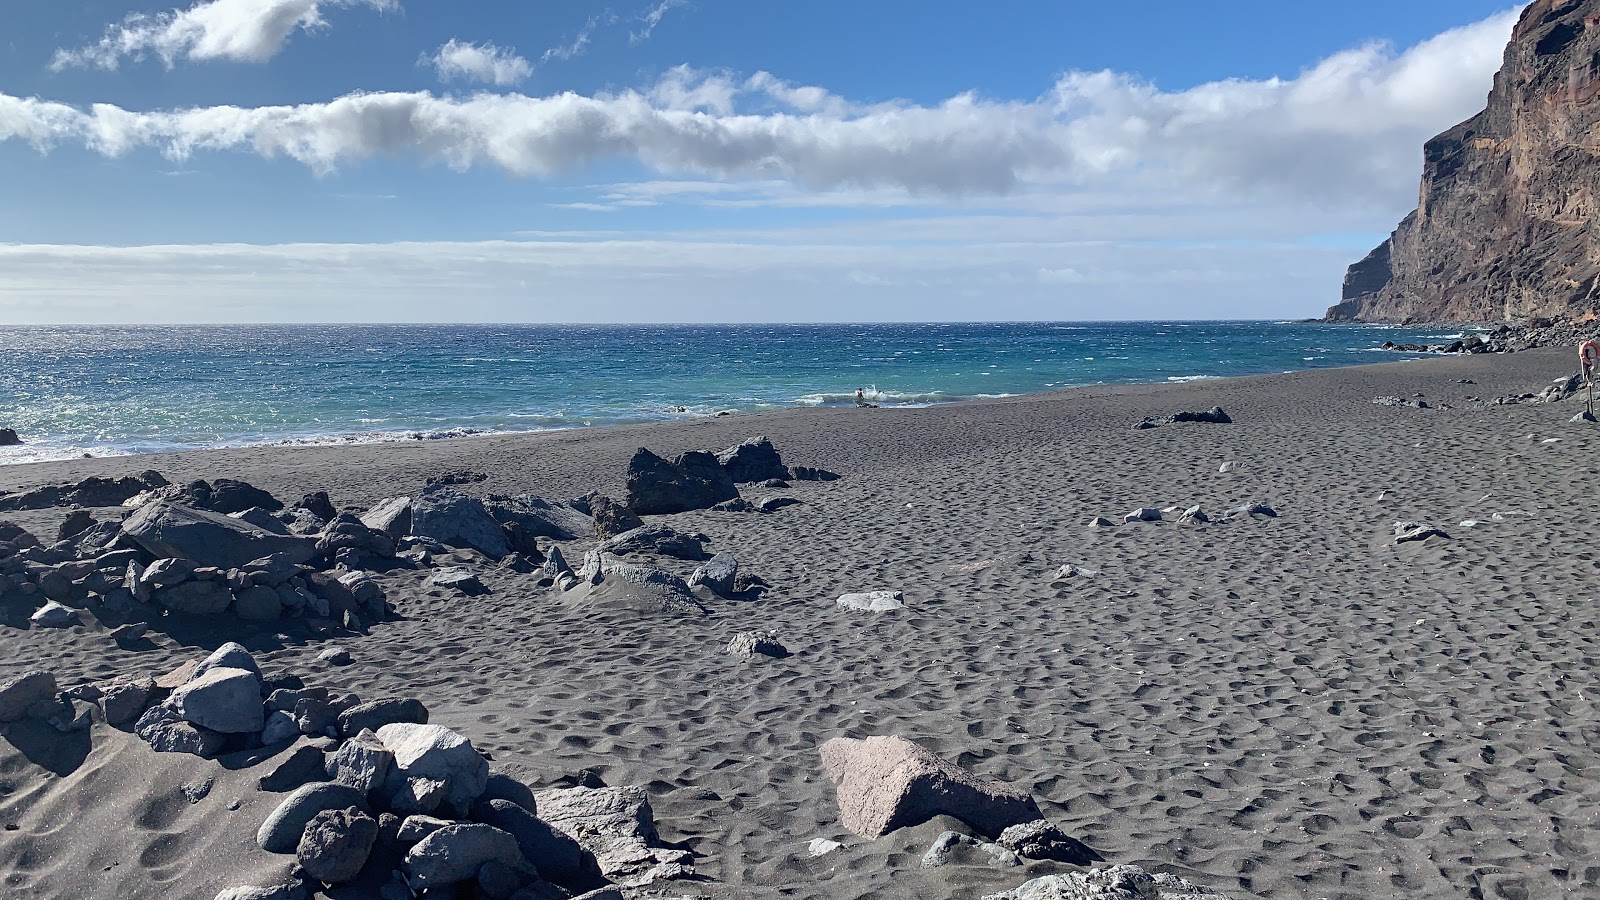 Foto di Playa del ingles con una superficie del sabbia grigia